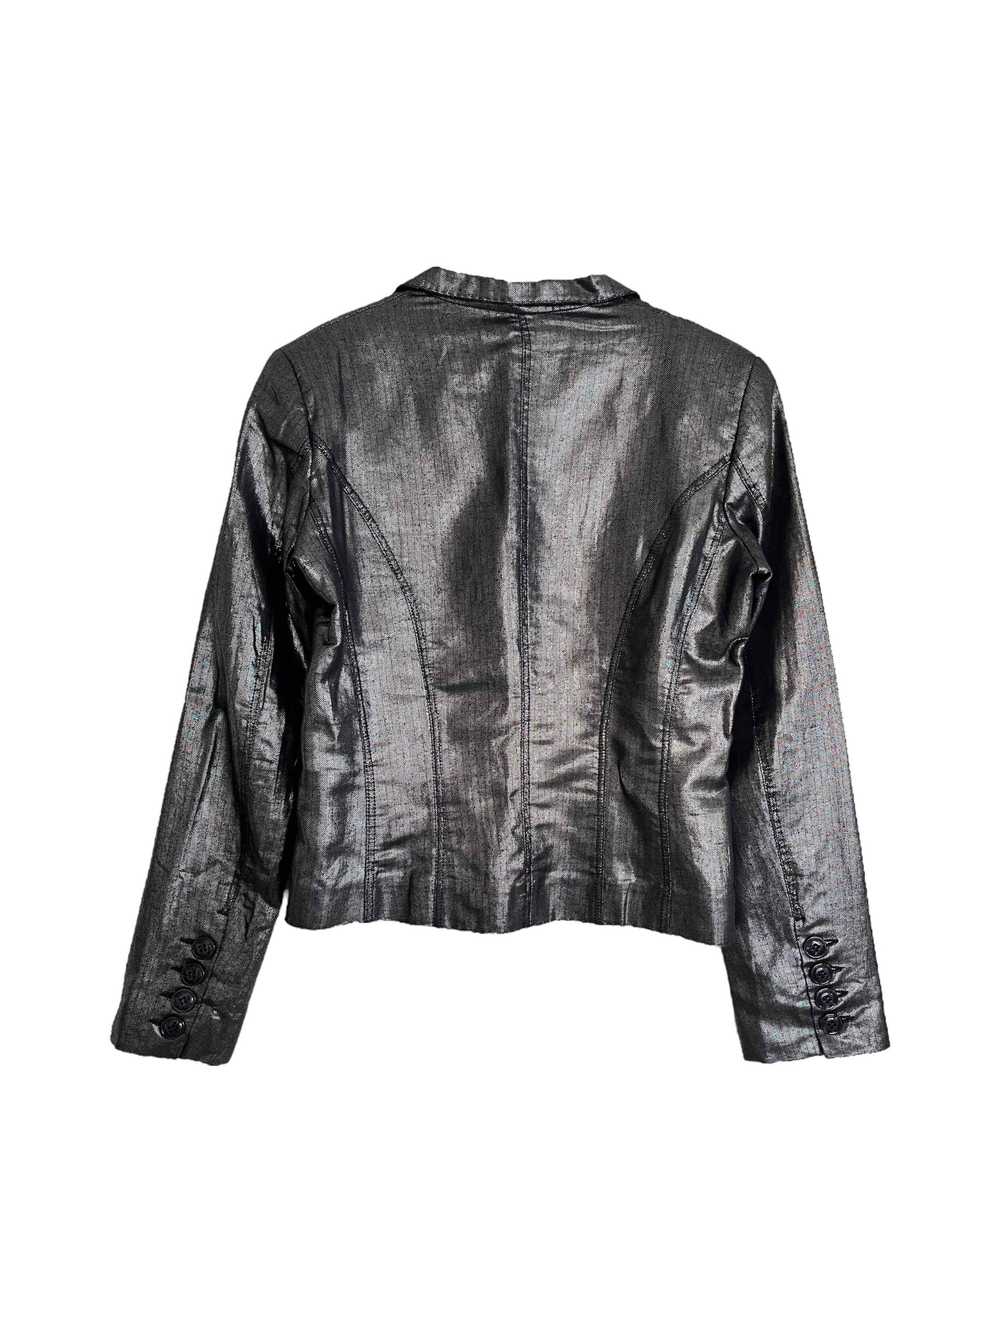 Versace silver jacket - image 4